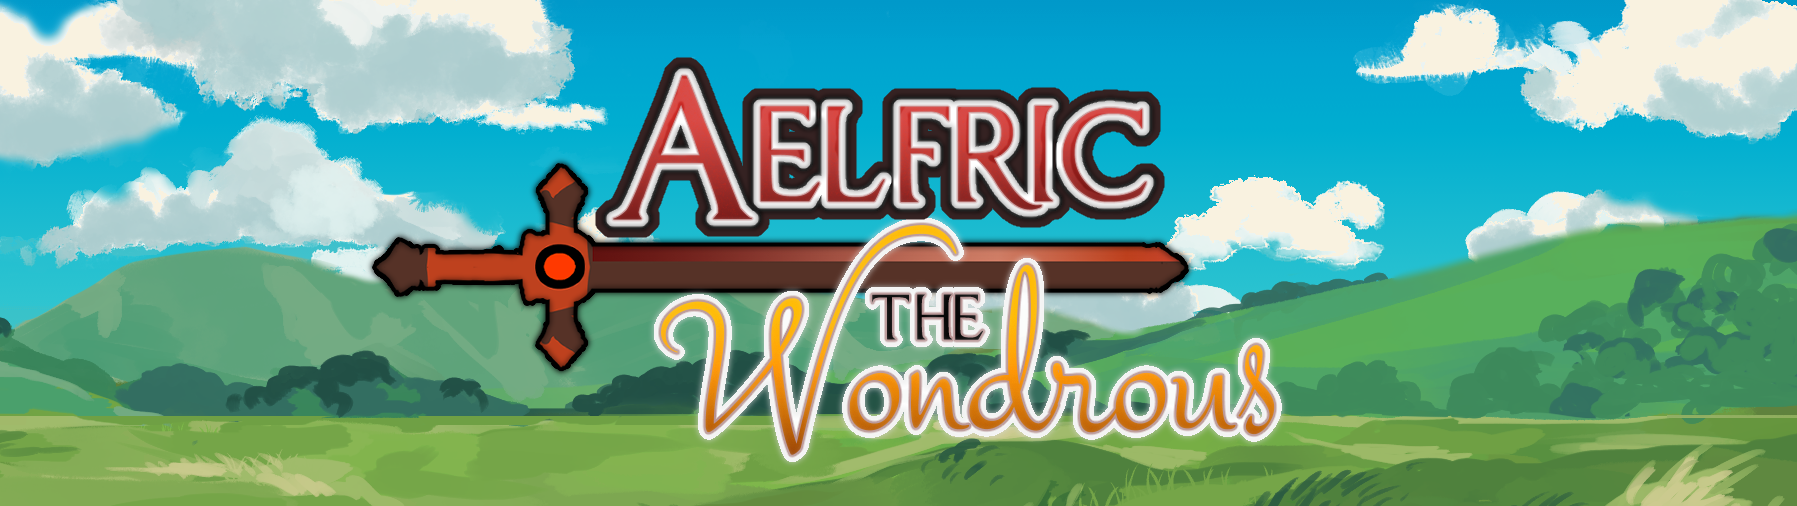 Aelfric the Wondrous